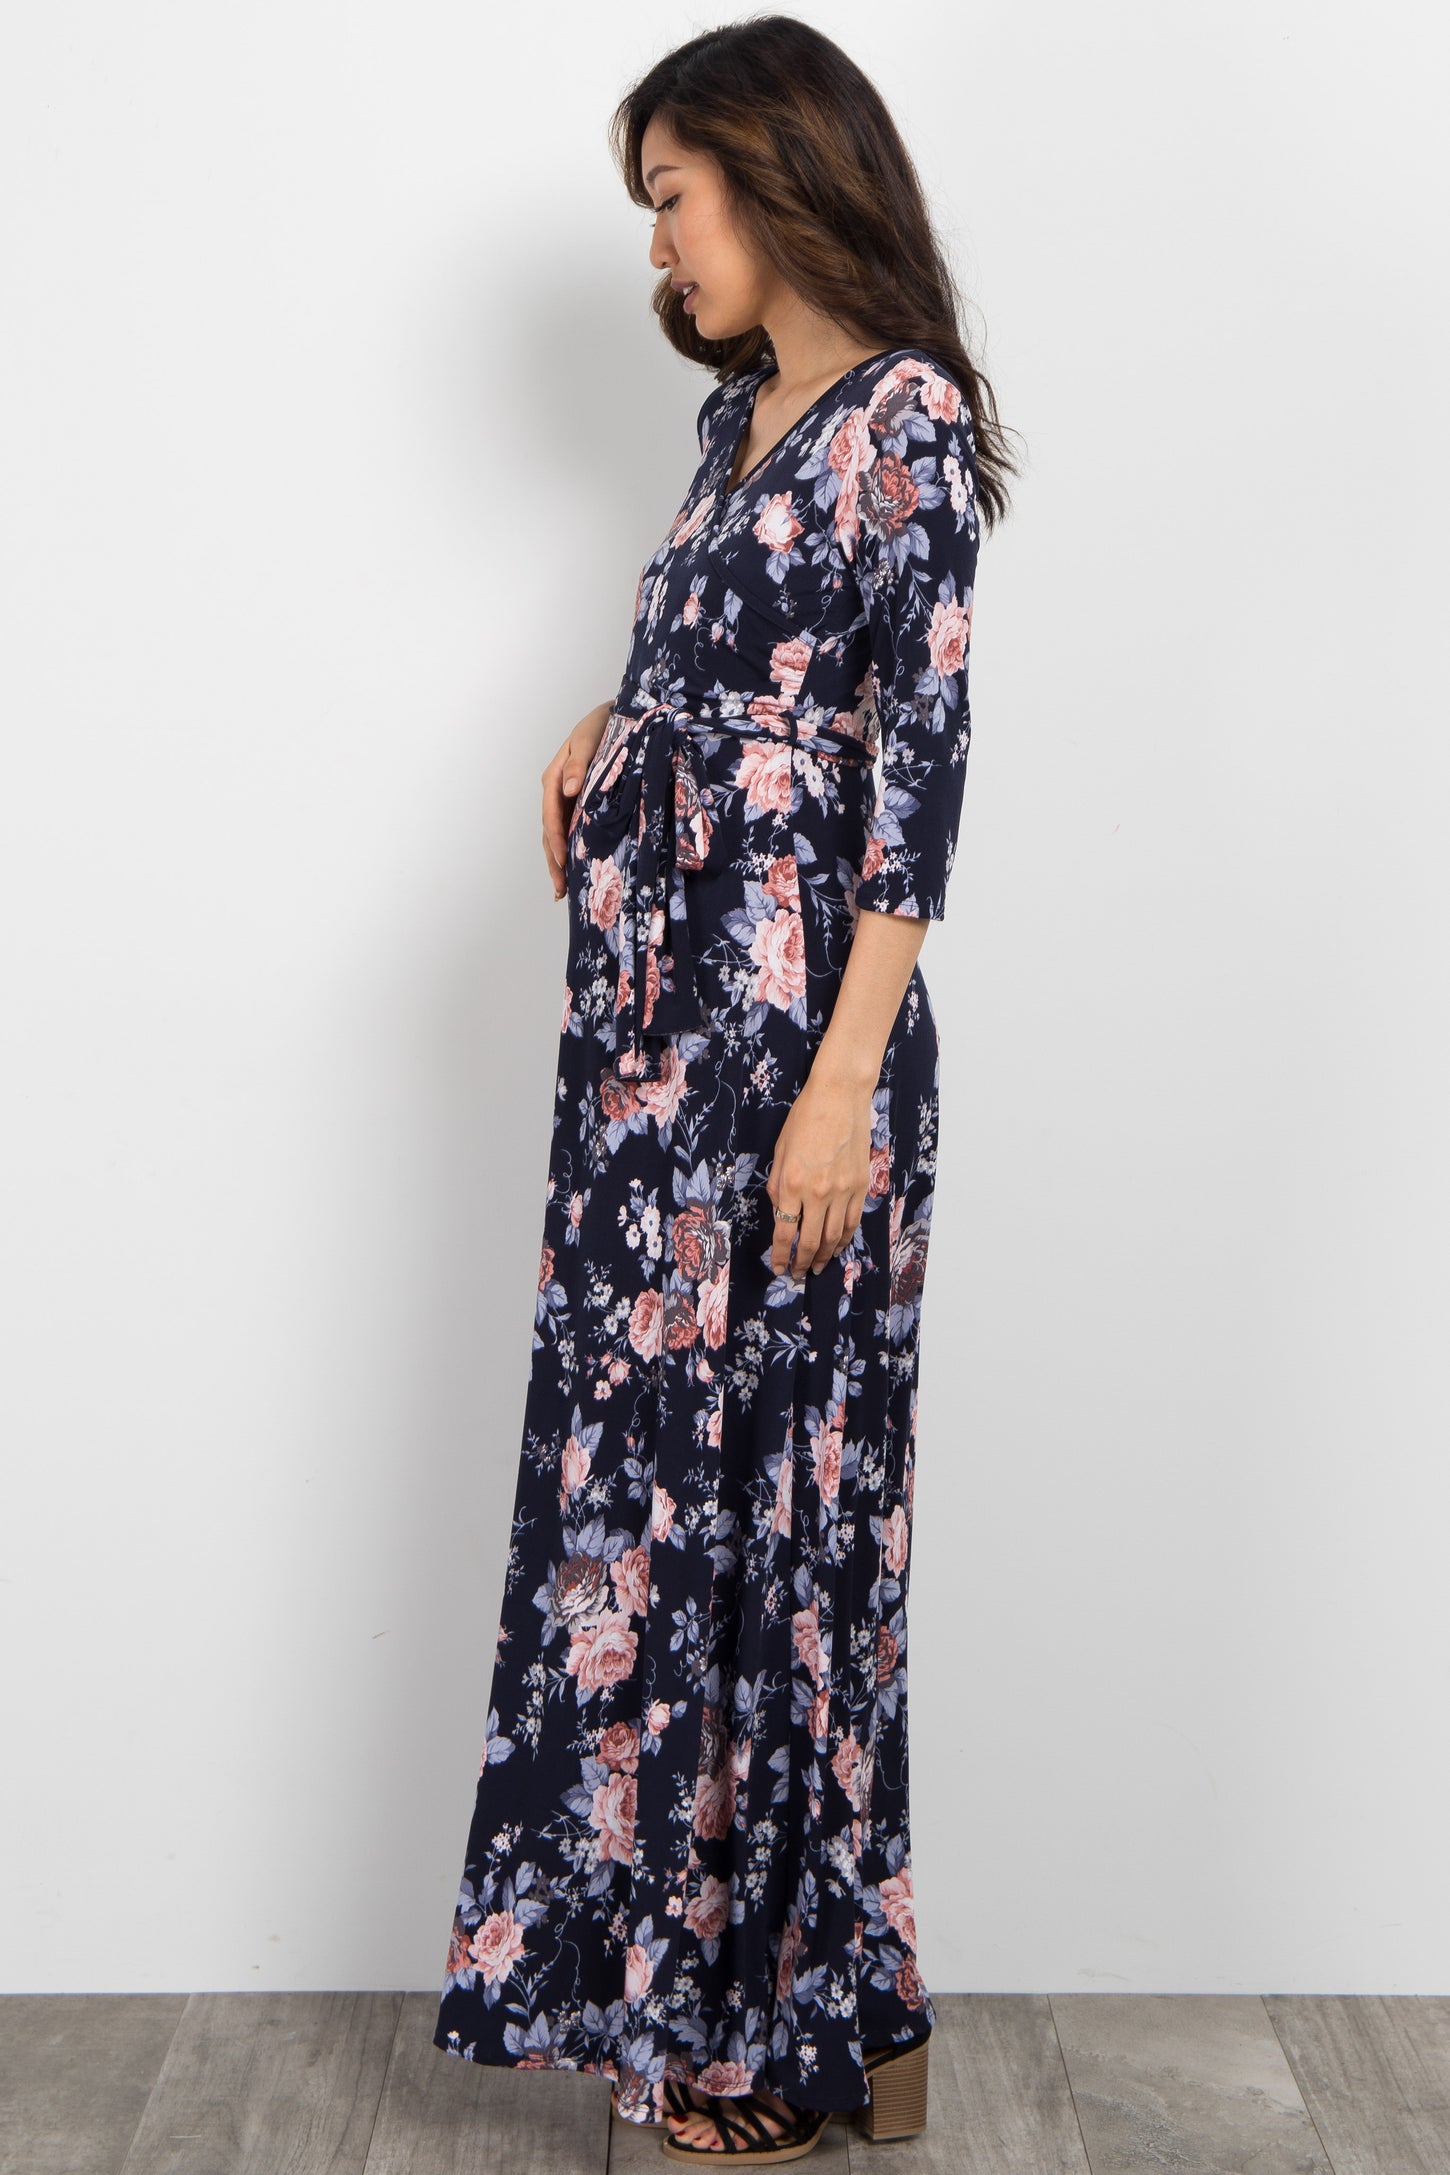 Navy Rose Floral Maternity Wrap Maxi Dress